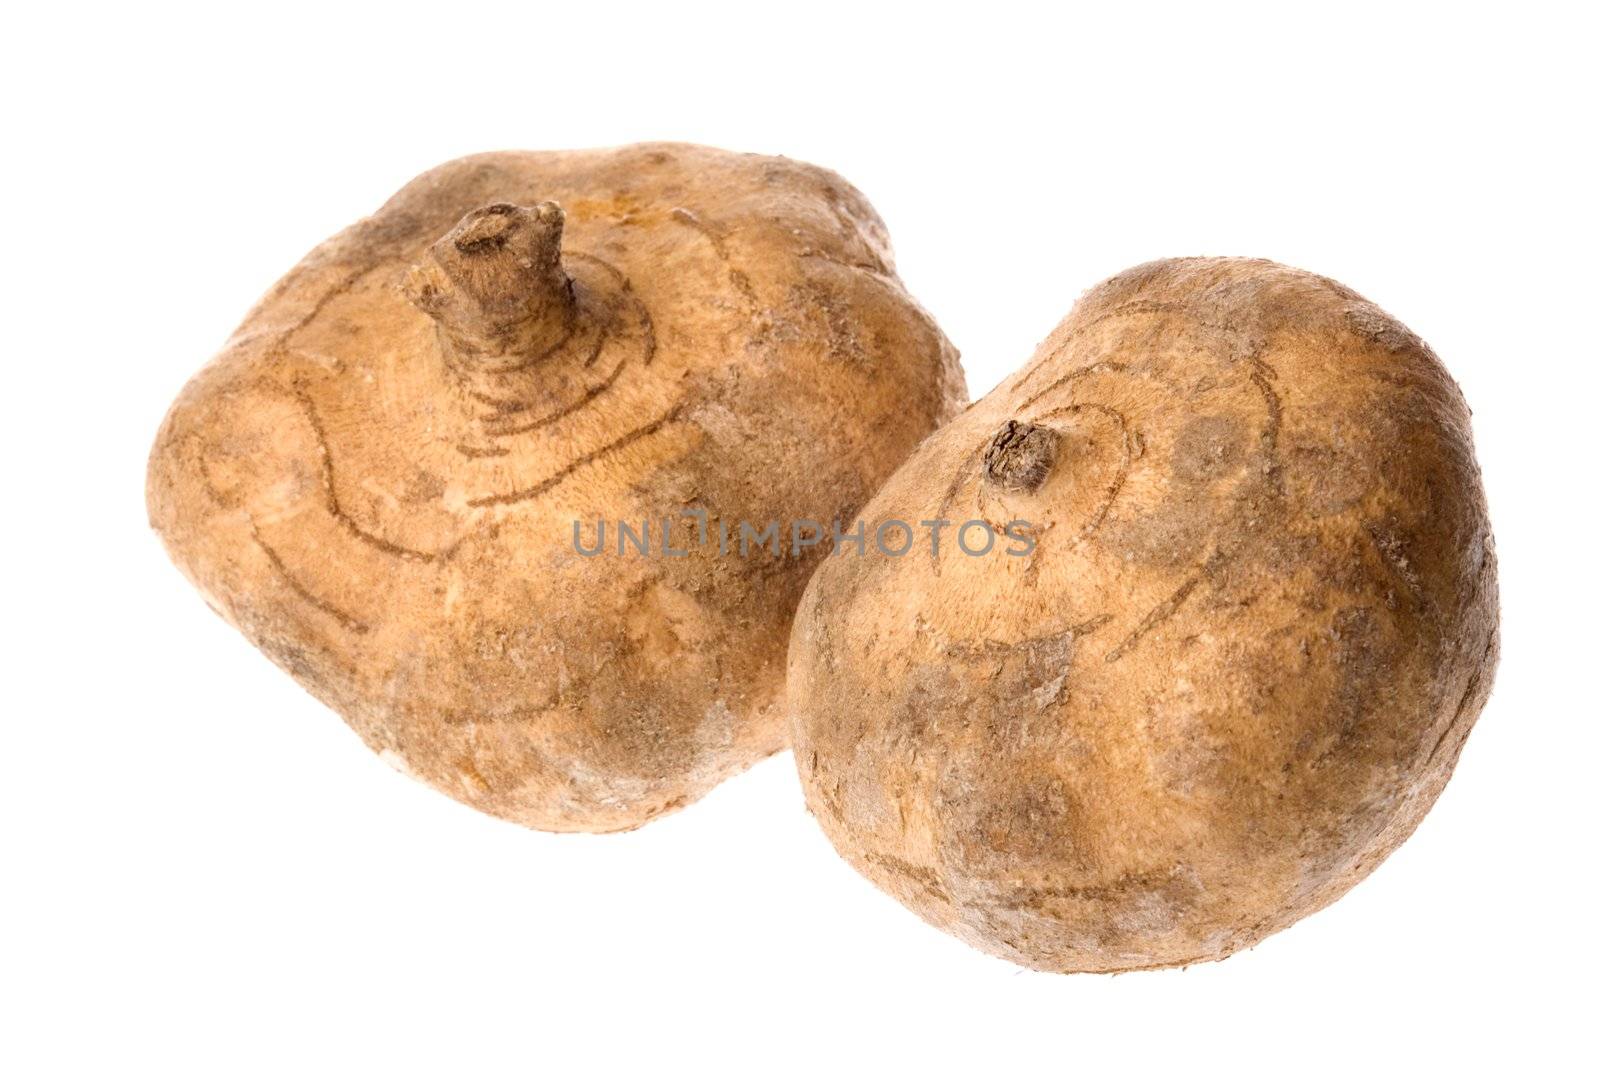 Isolated close-up image of turnips.